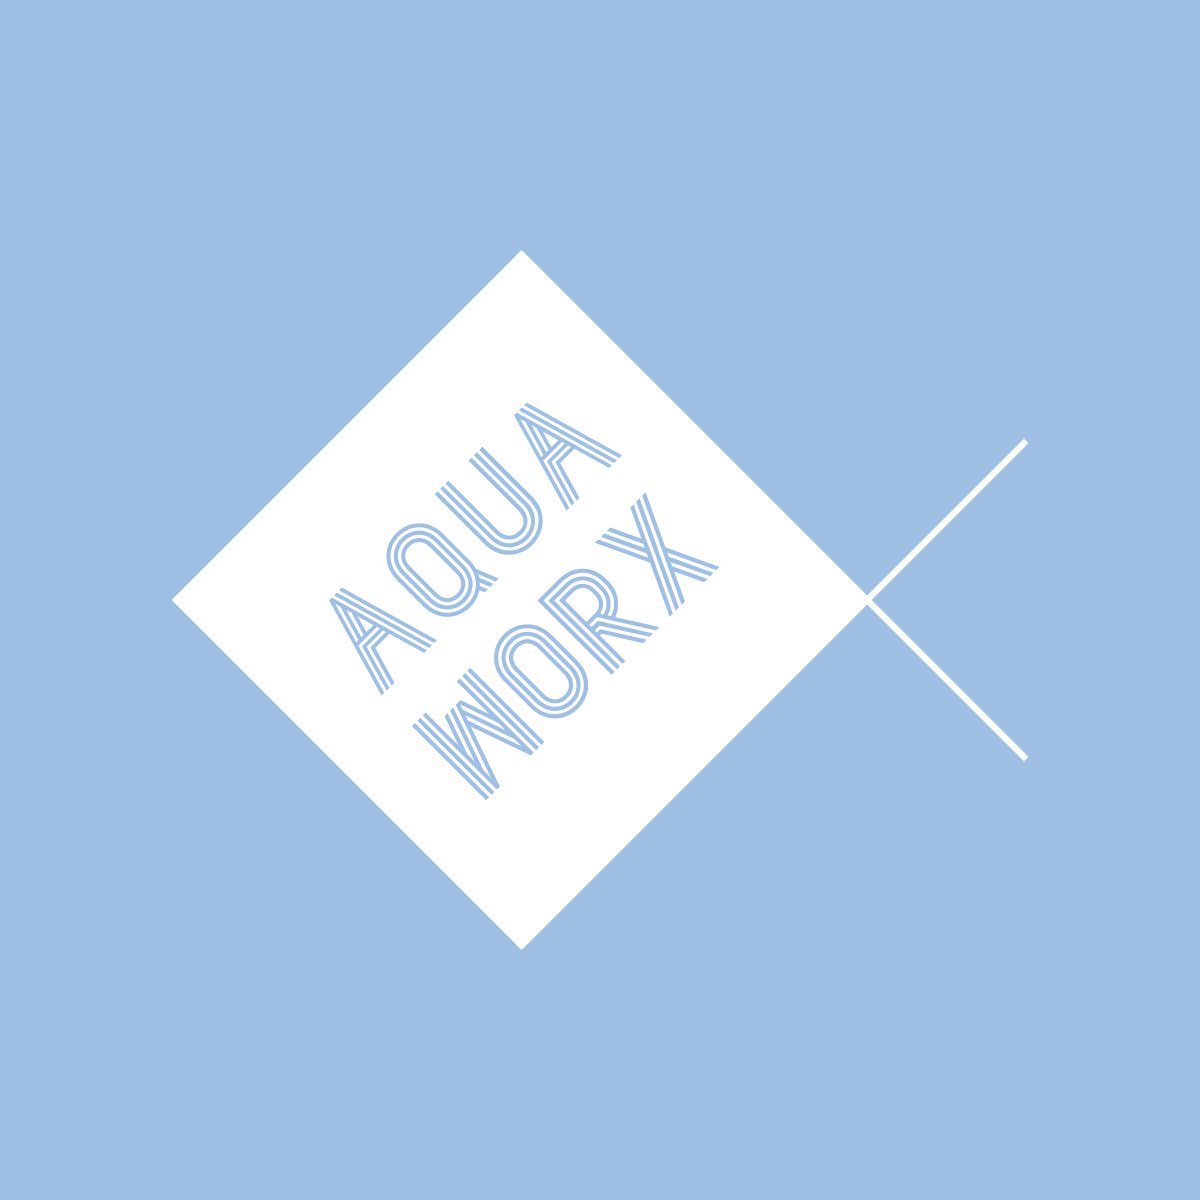 Aqua worx logo